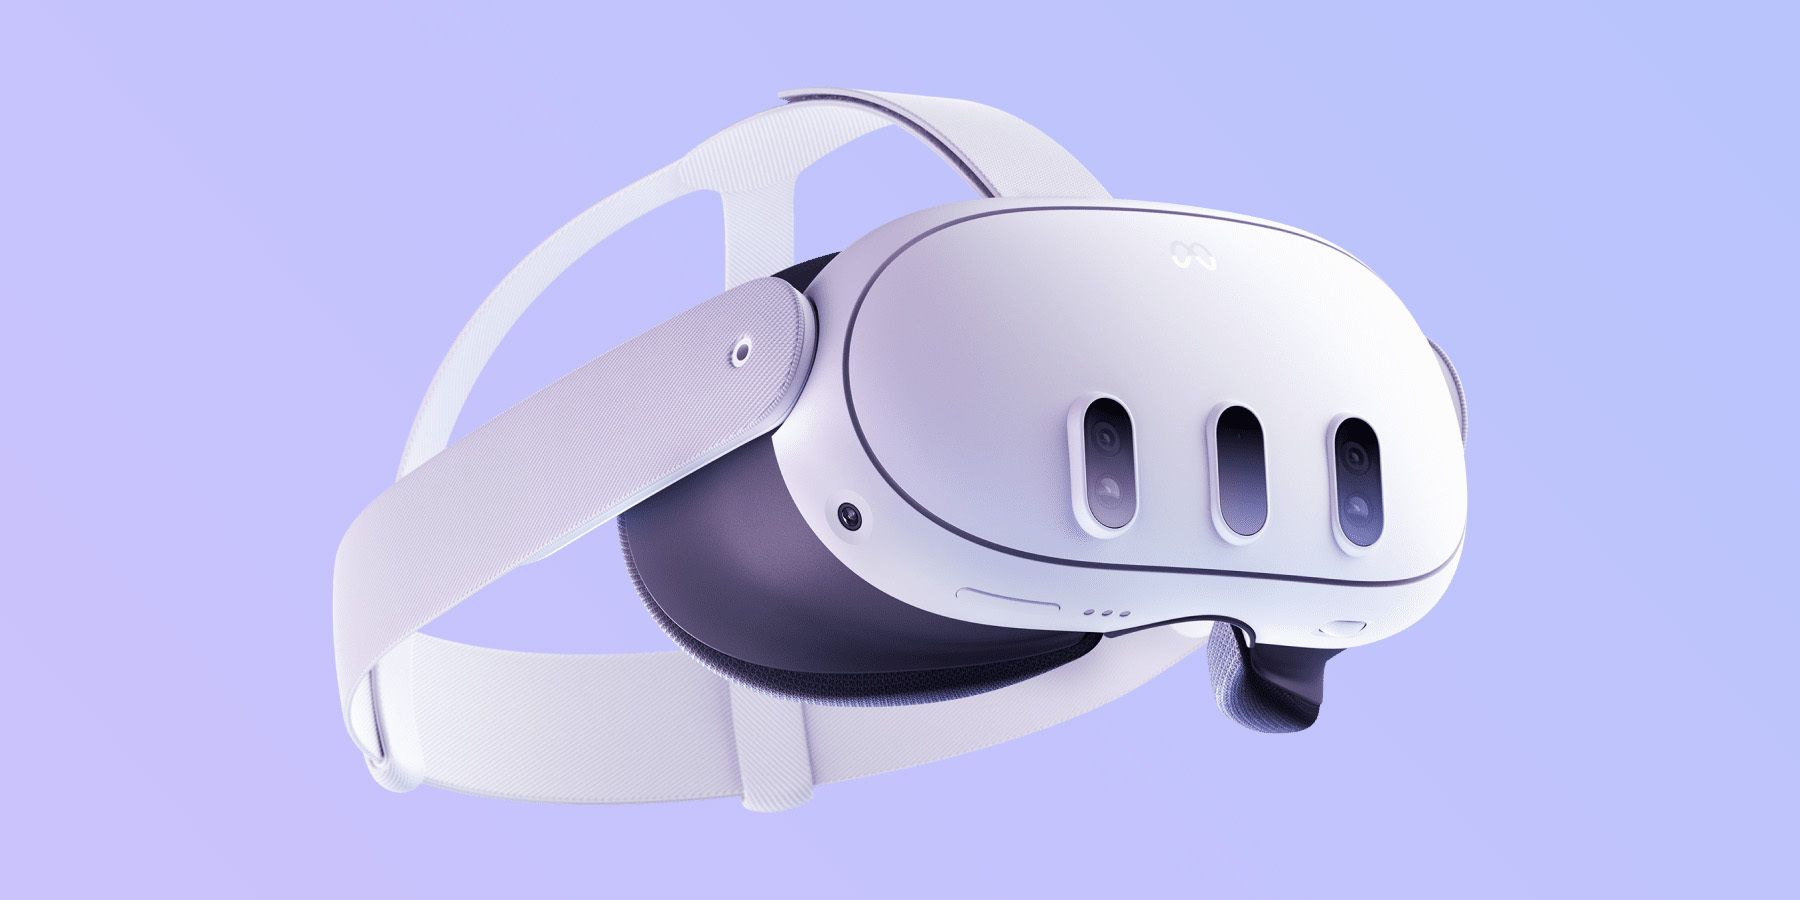 meta quest virtual reality headset